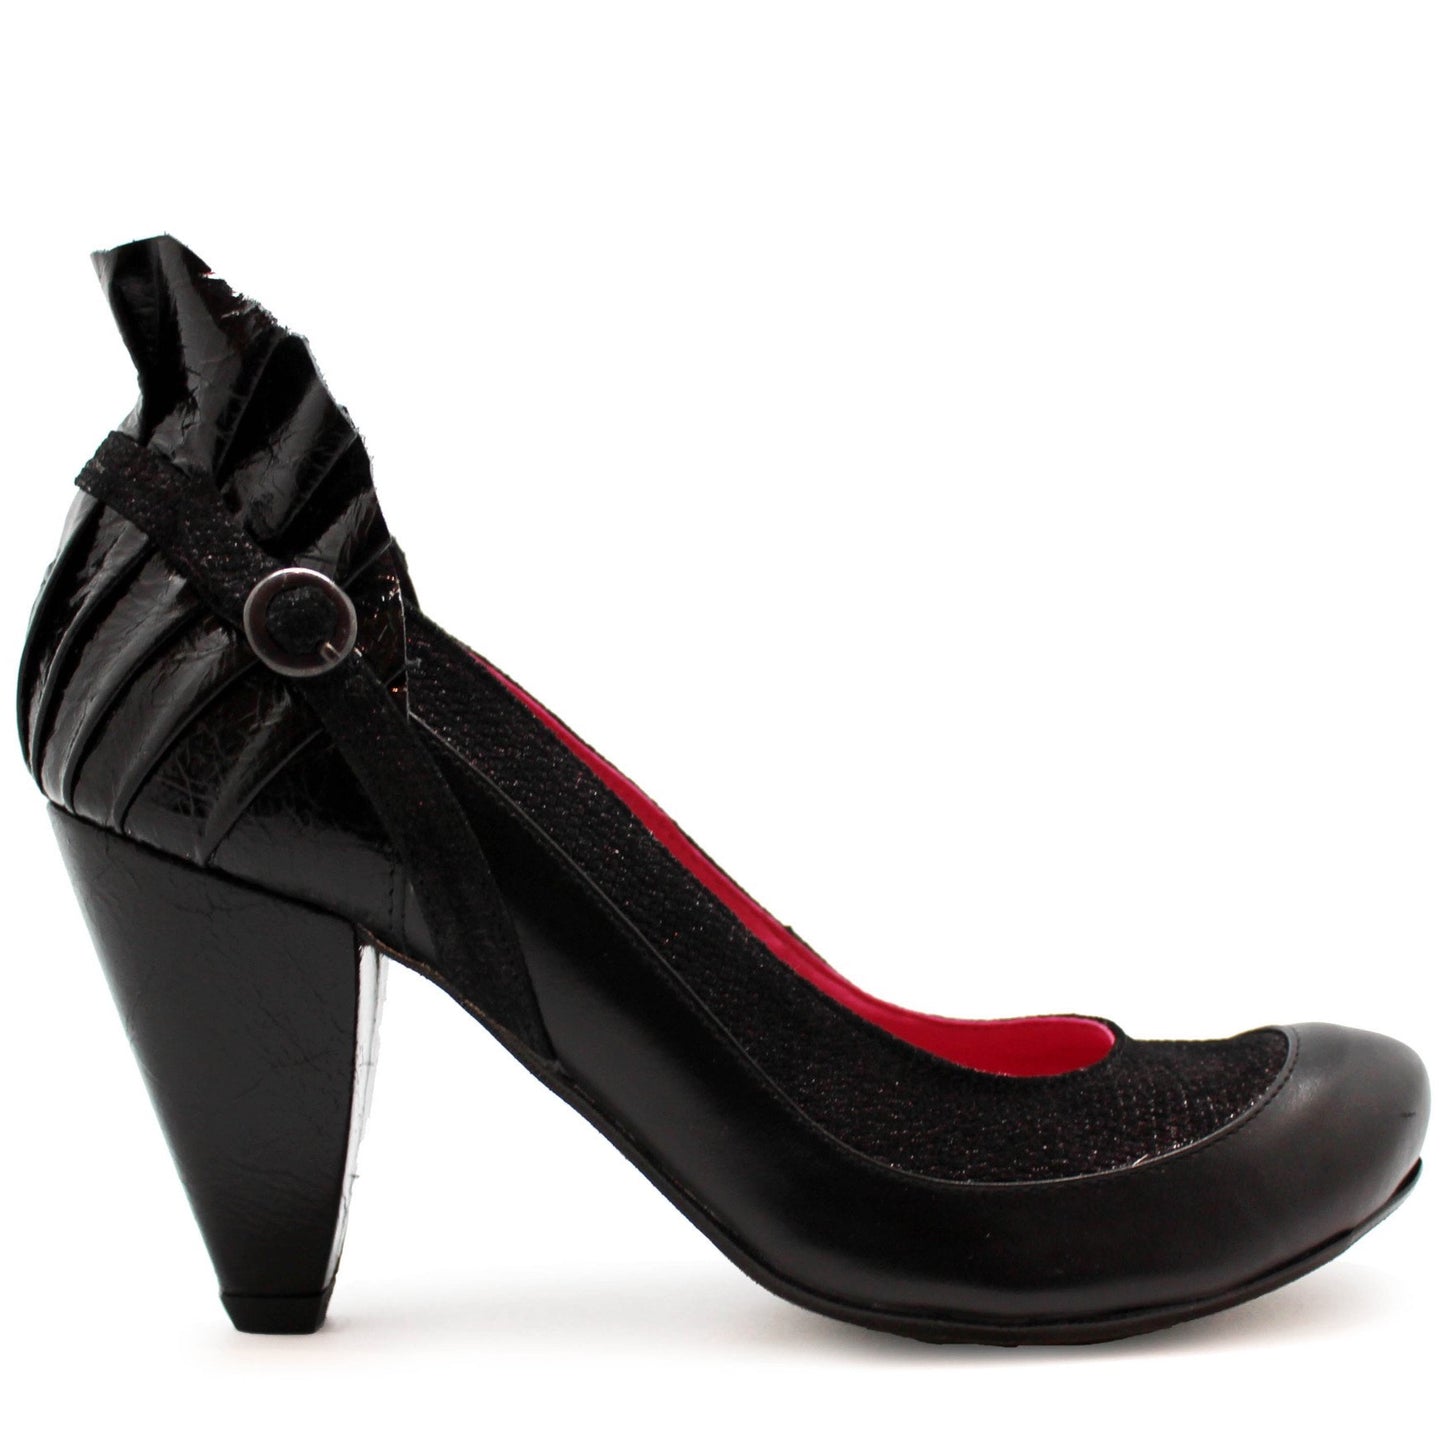 Tresor - Black leather heel shoe